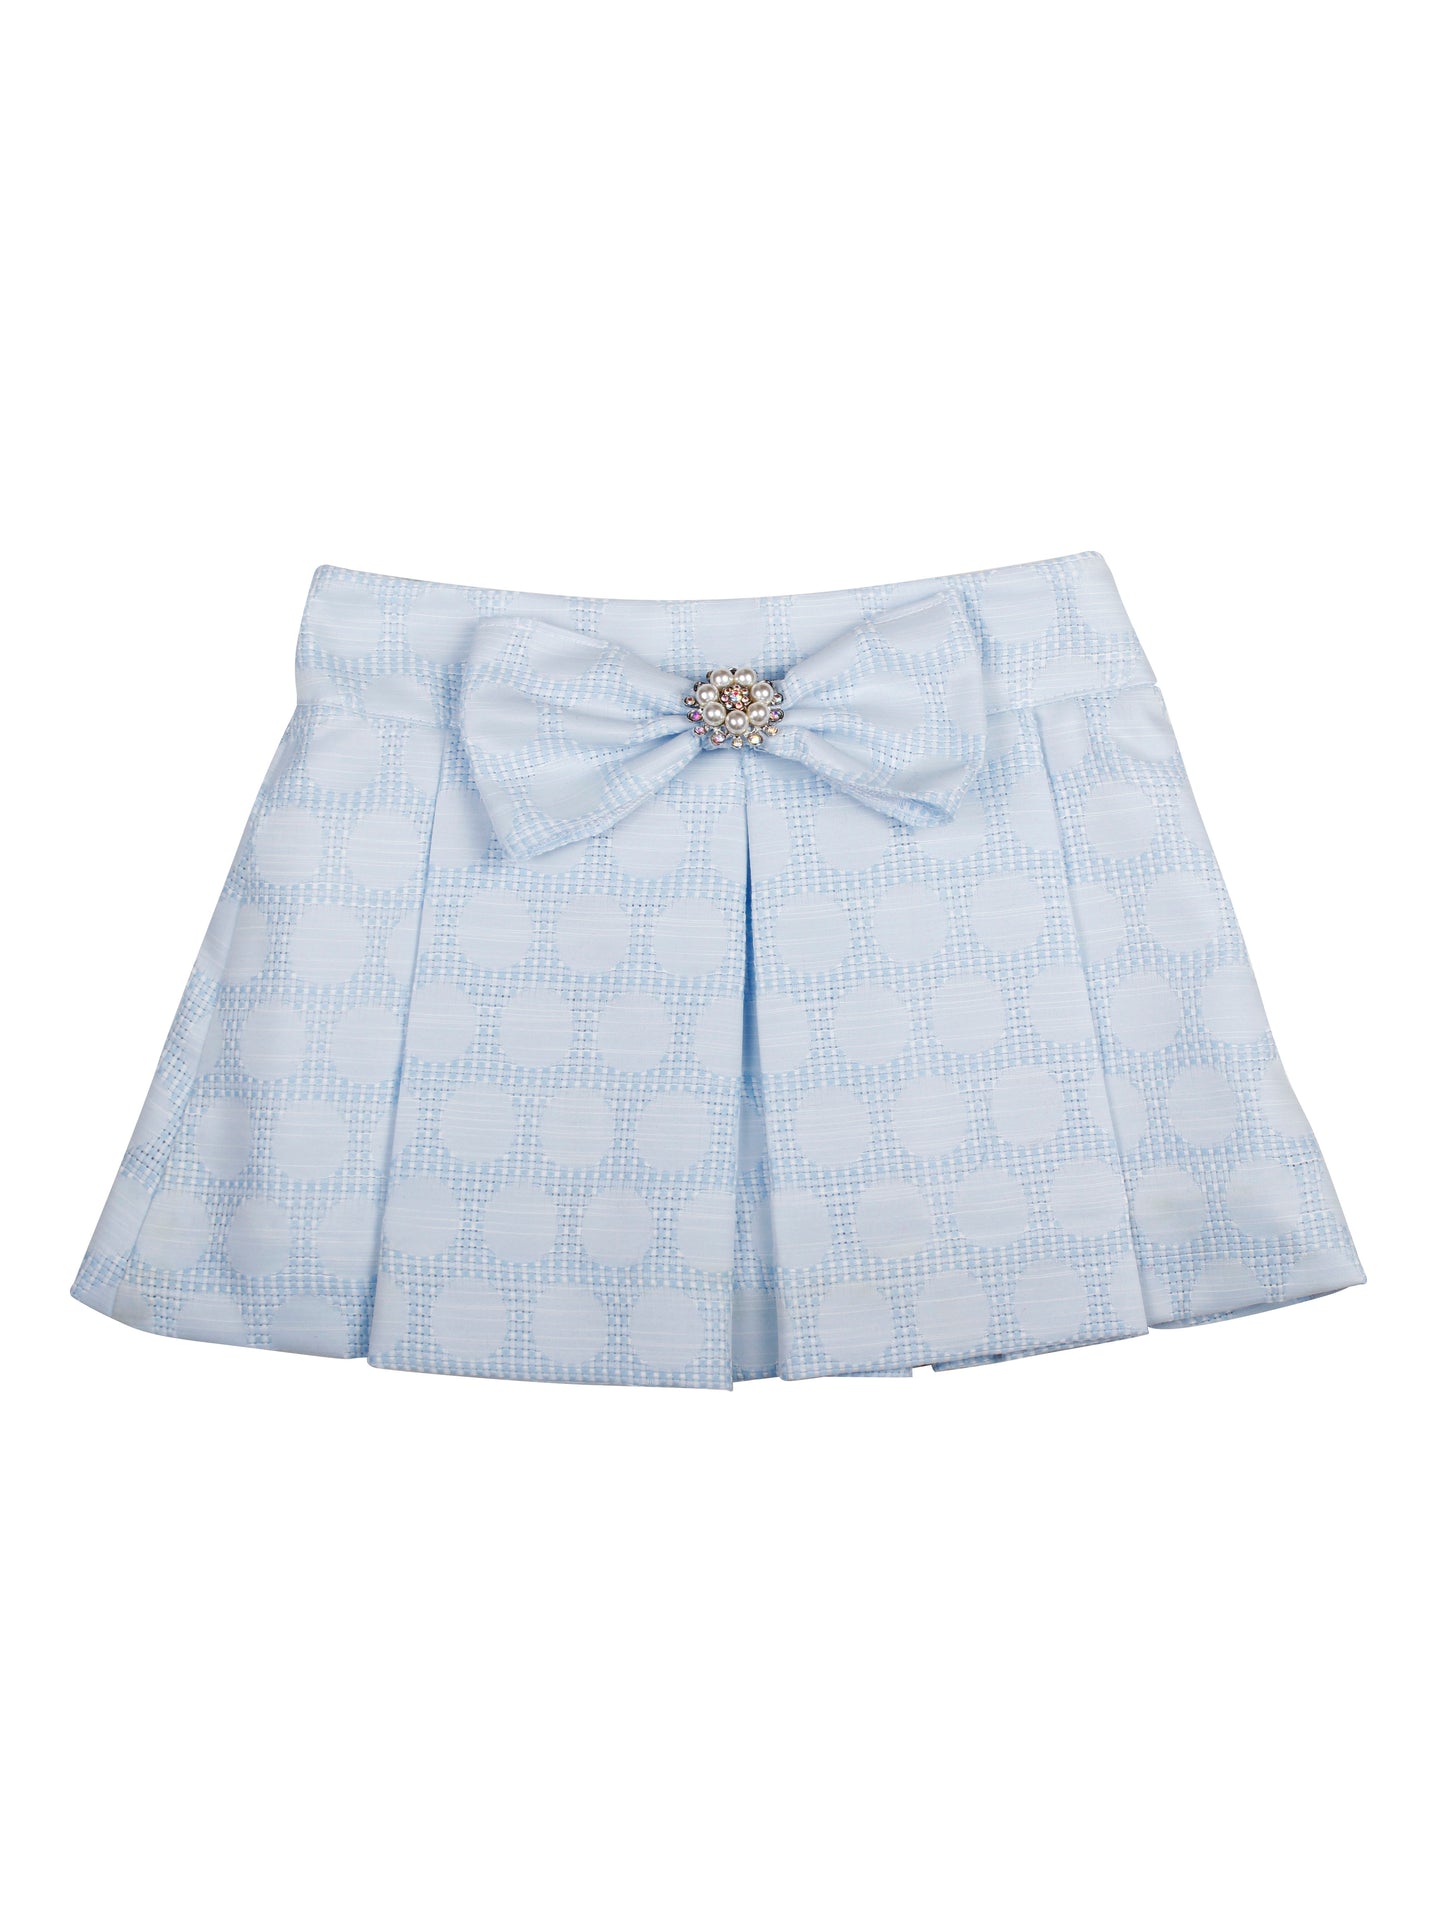 Naxos Girls Blue Skirt Set